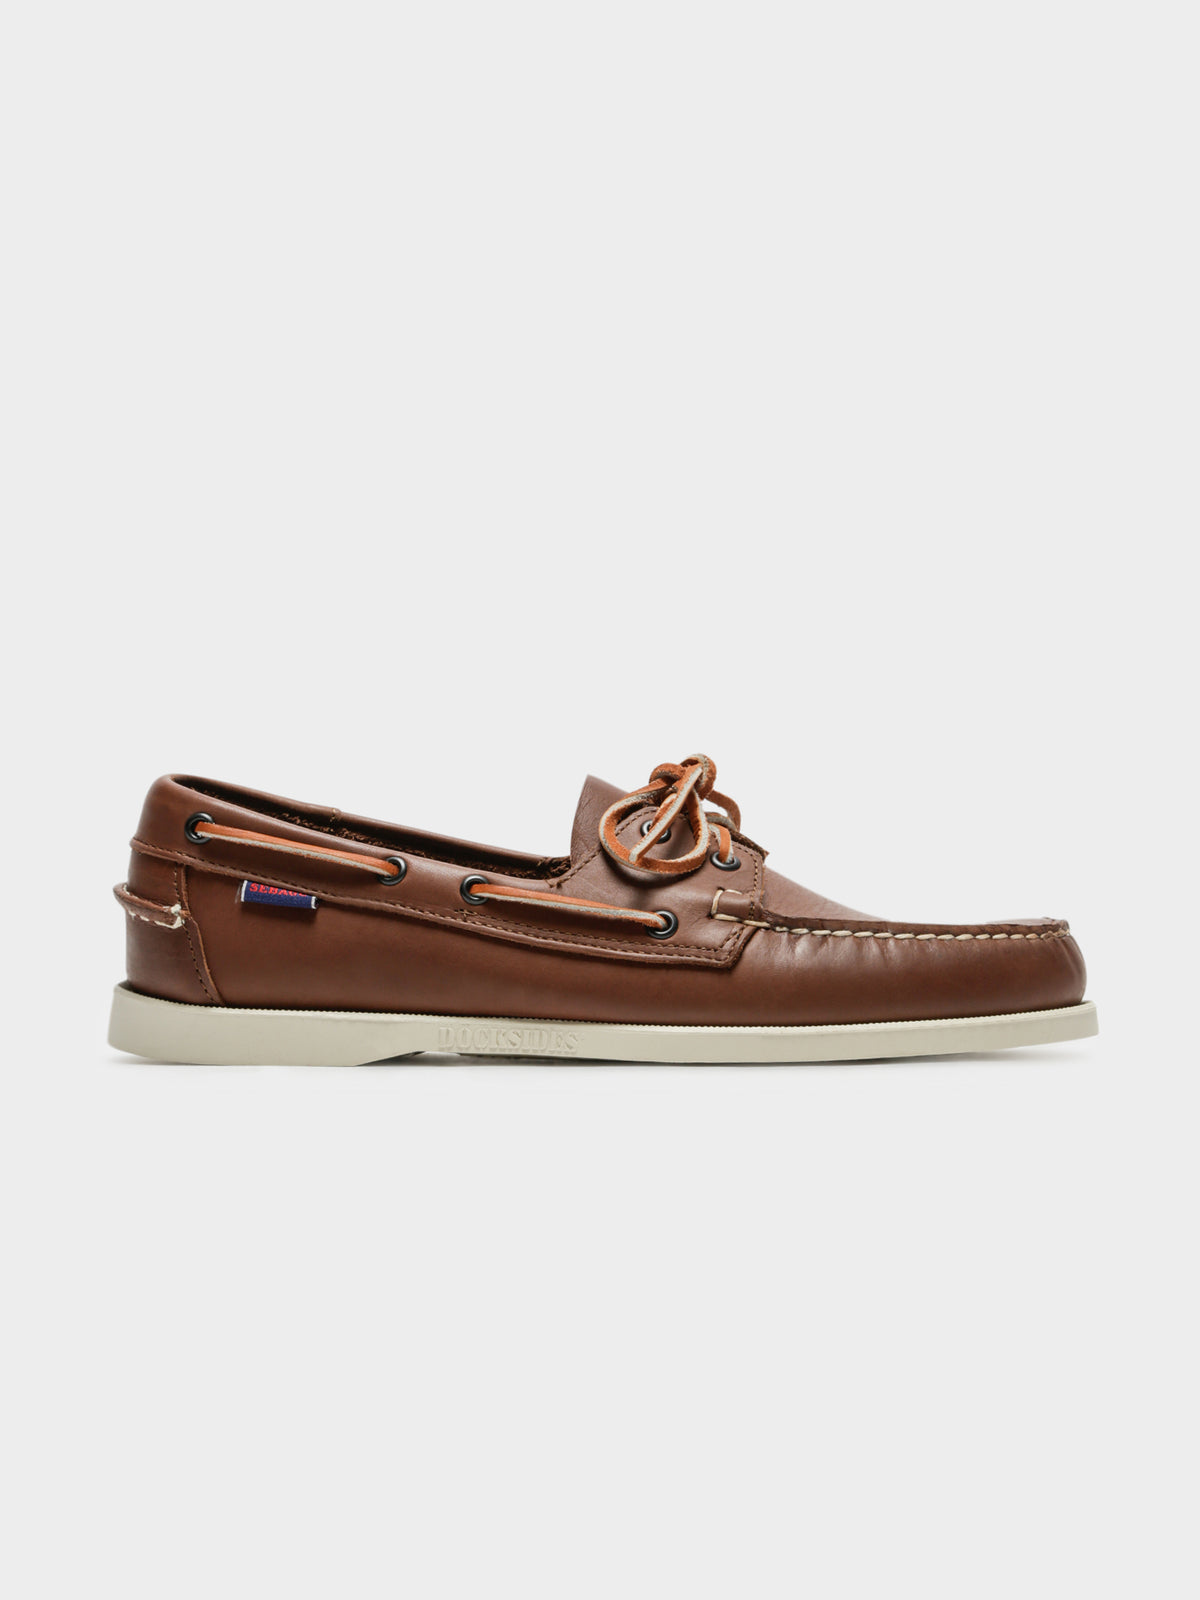 Mens Docksides Portland Boat Shoes in Brown